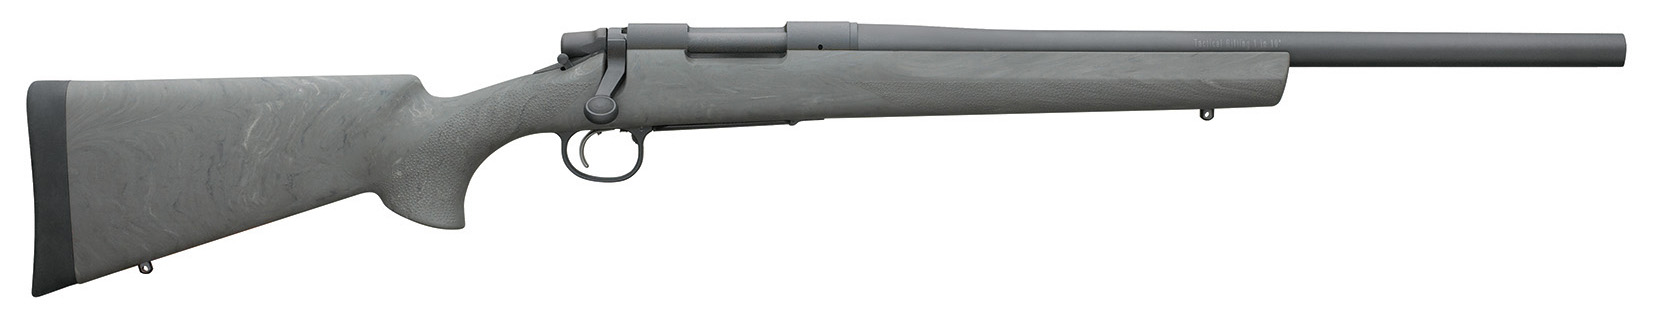 Model 700 SPS Tactical AAC